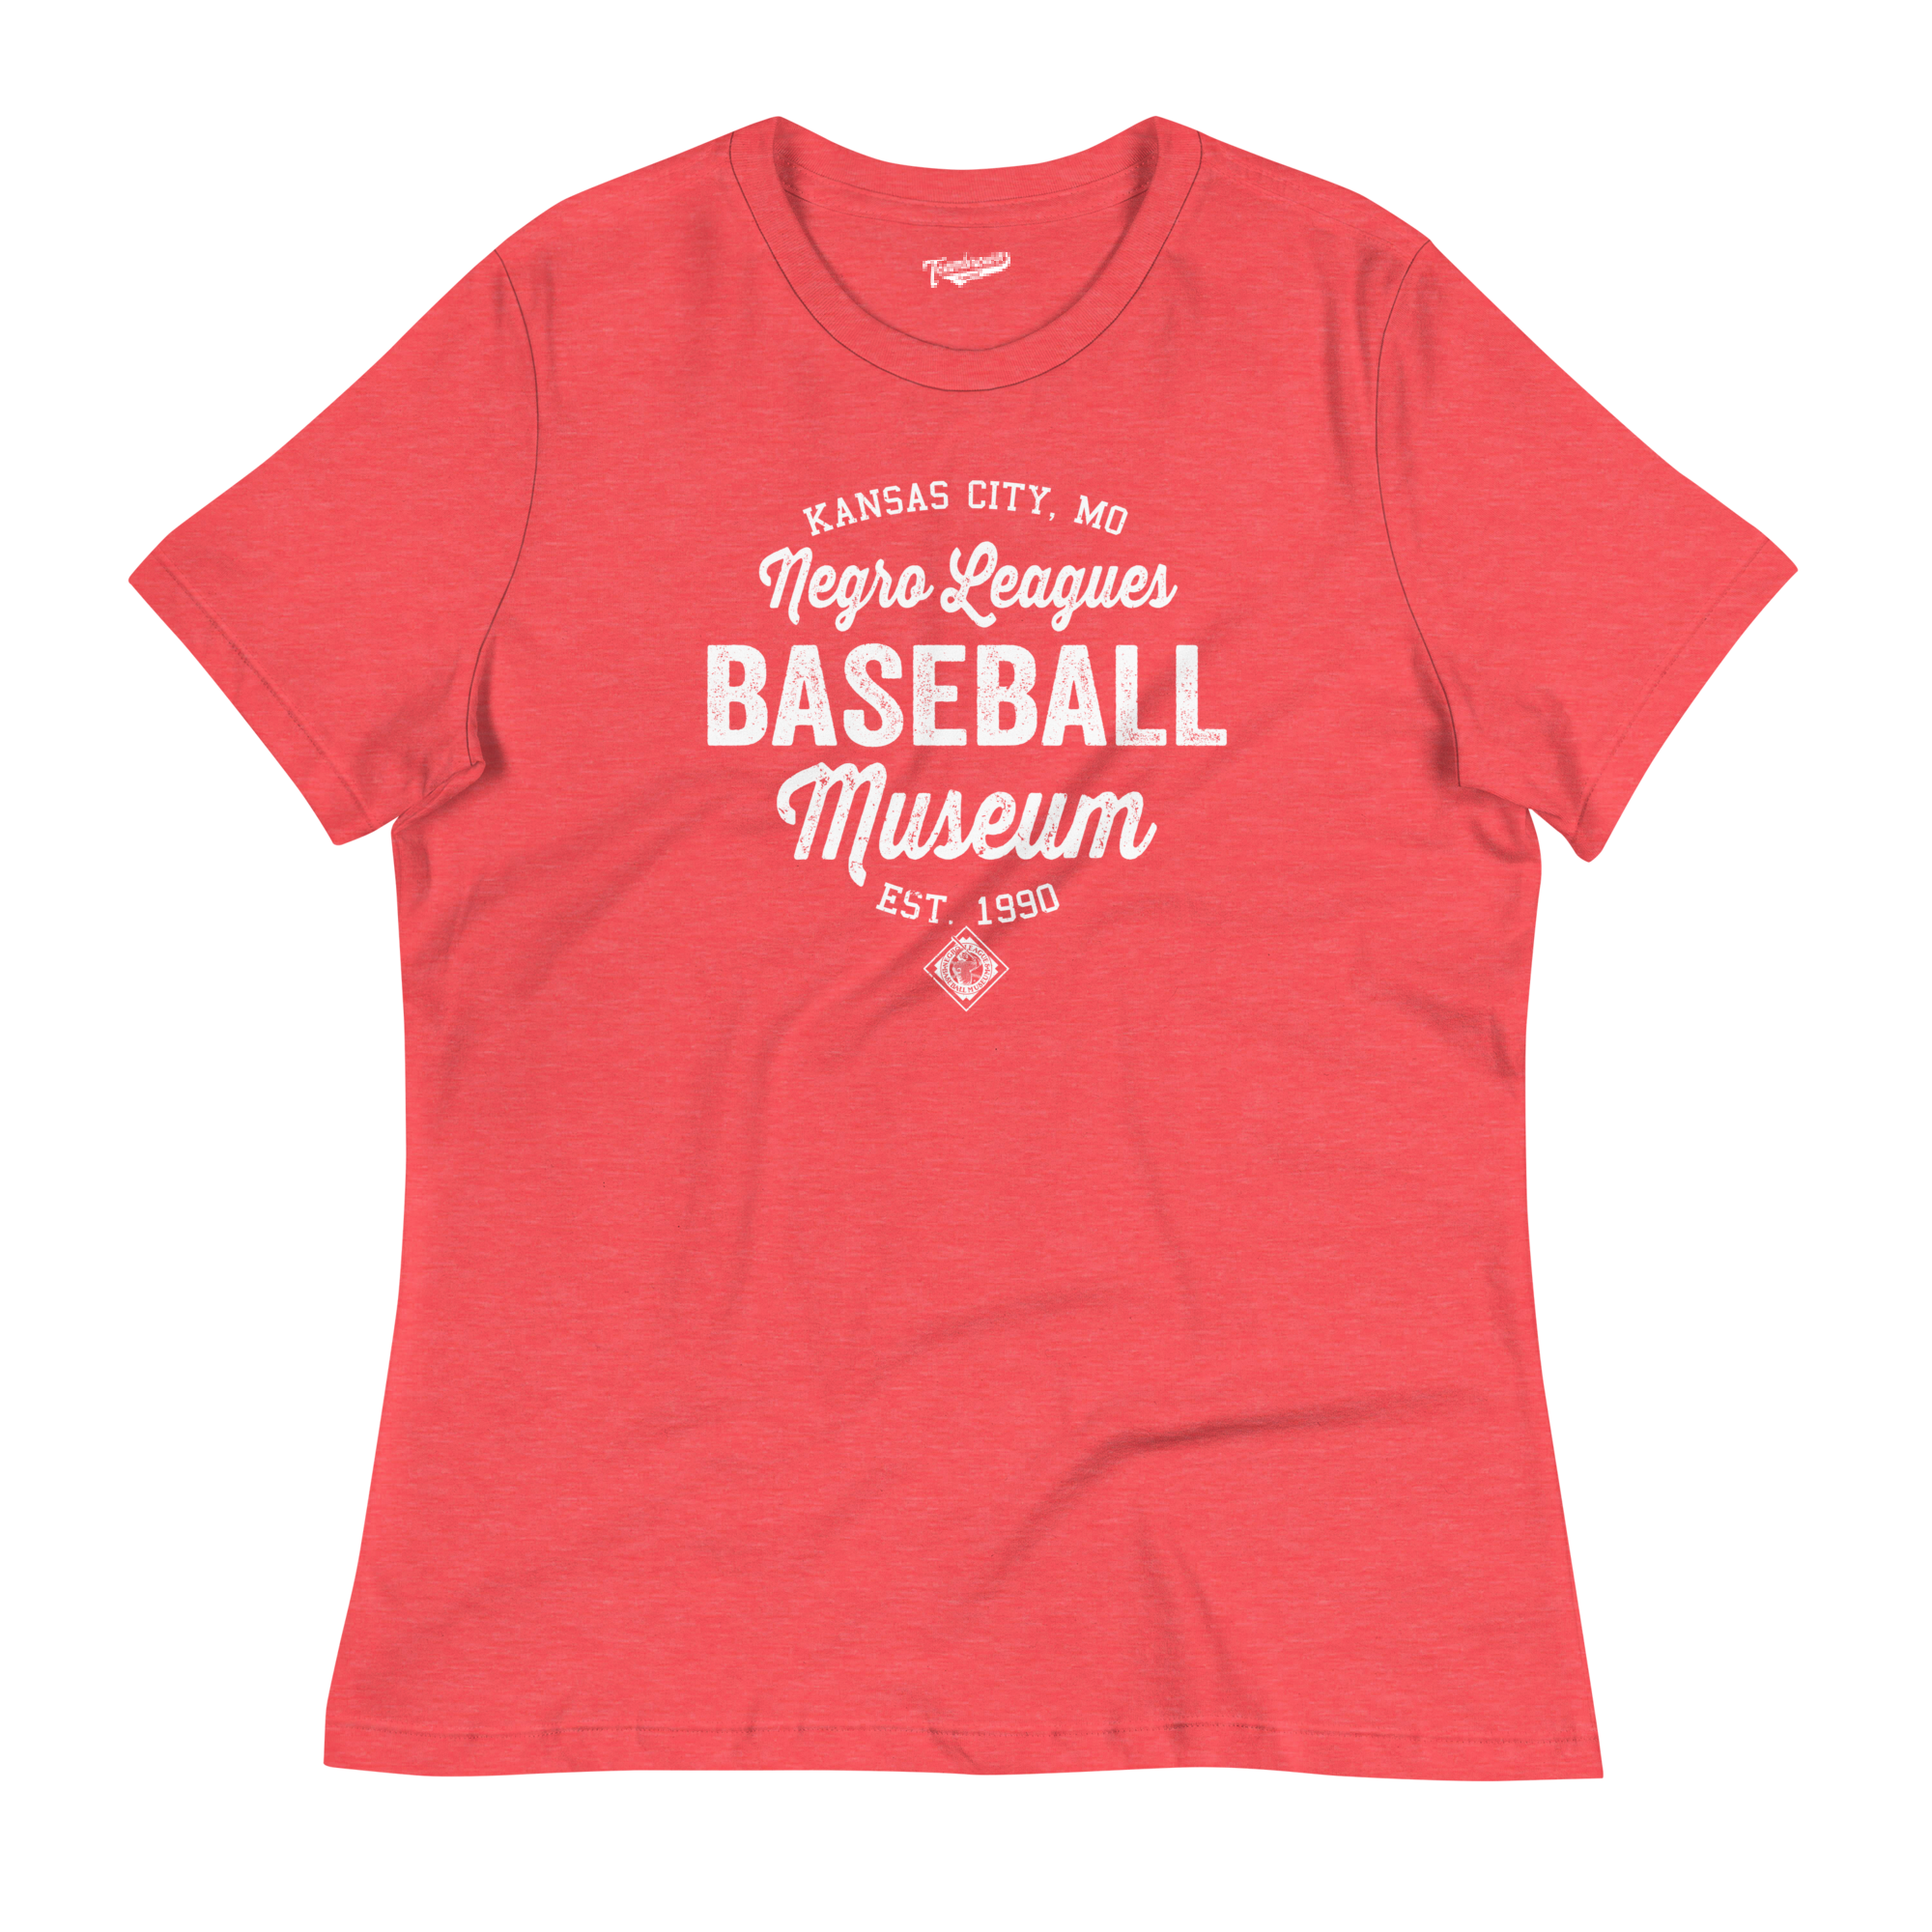 NLBM - Negro Leagues Baseball Museum - Est 1990 - Women's Relaxed Fit T-Shirt